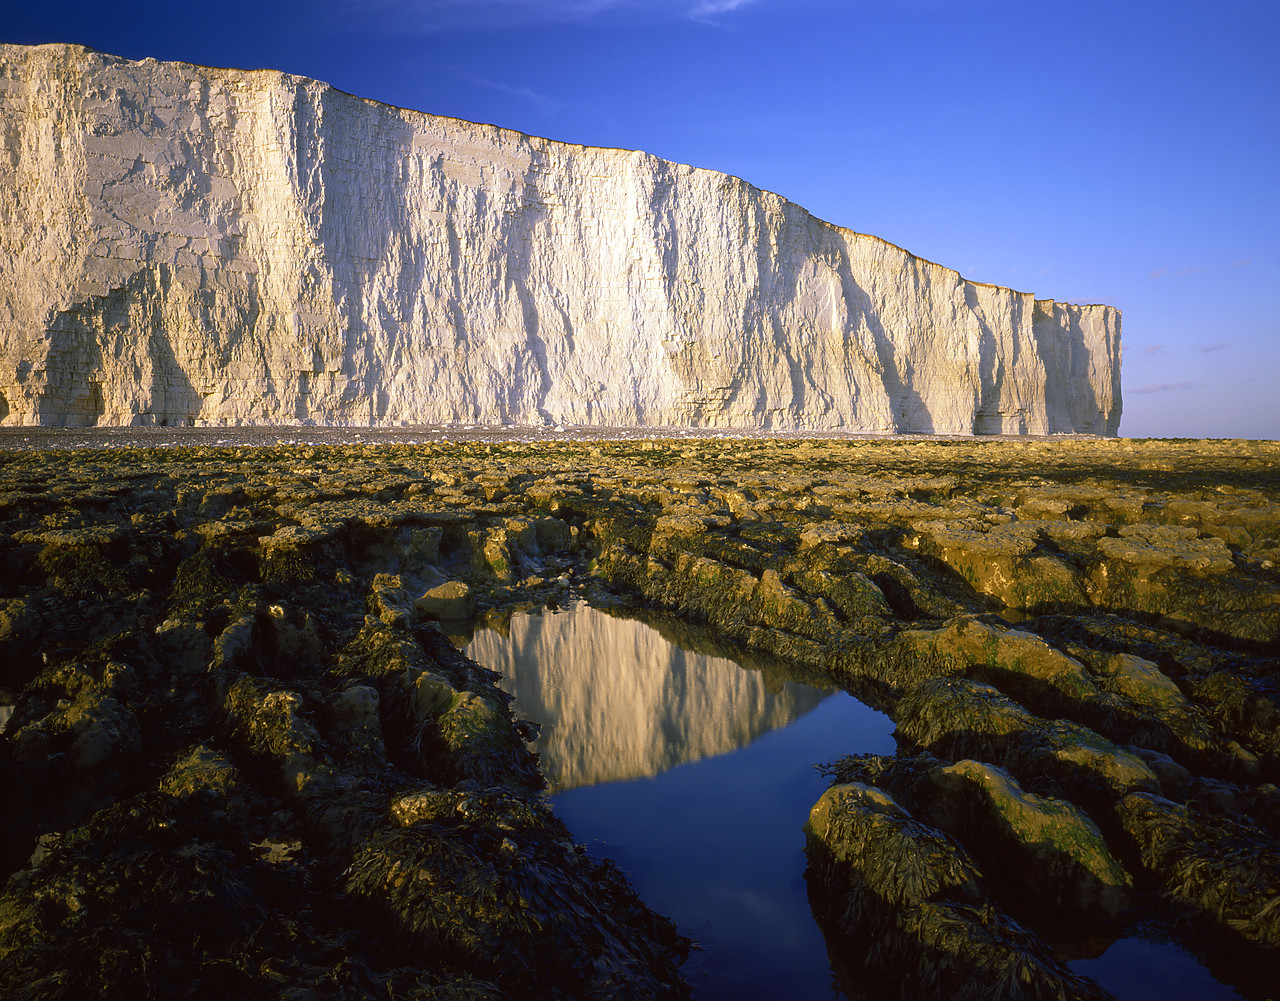 #913408-1 - Chalk Cliffs at Birling Gap, East Sussex, England